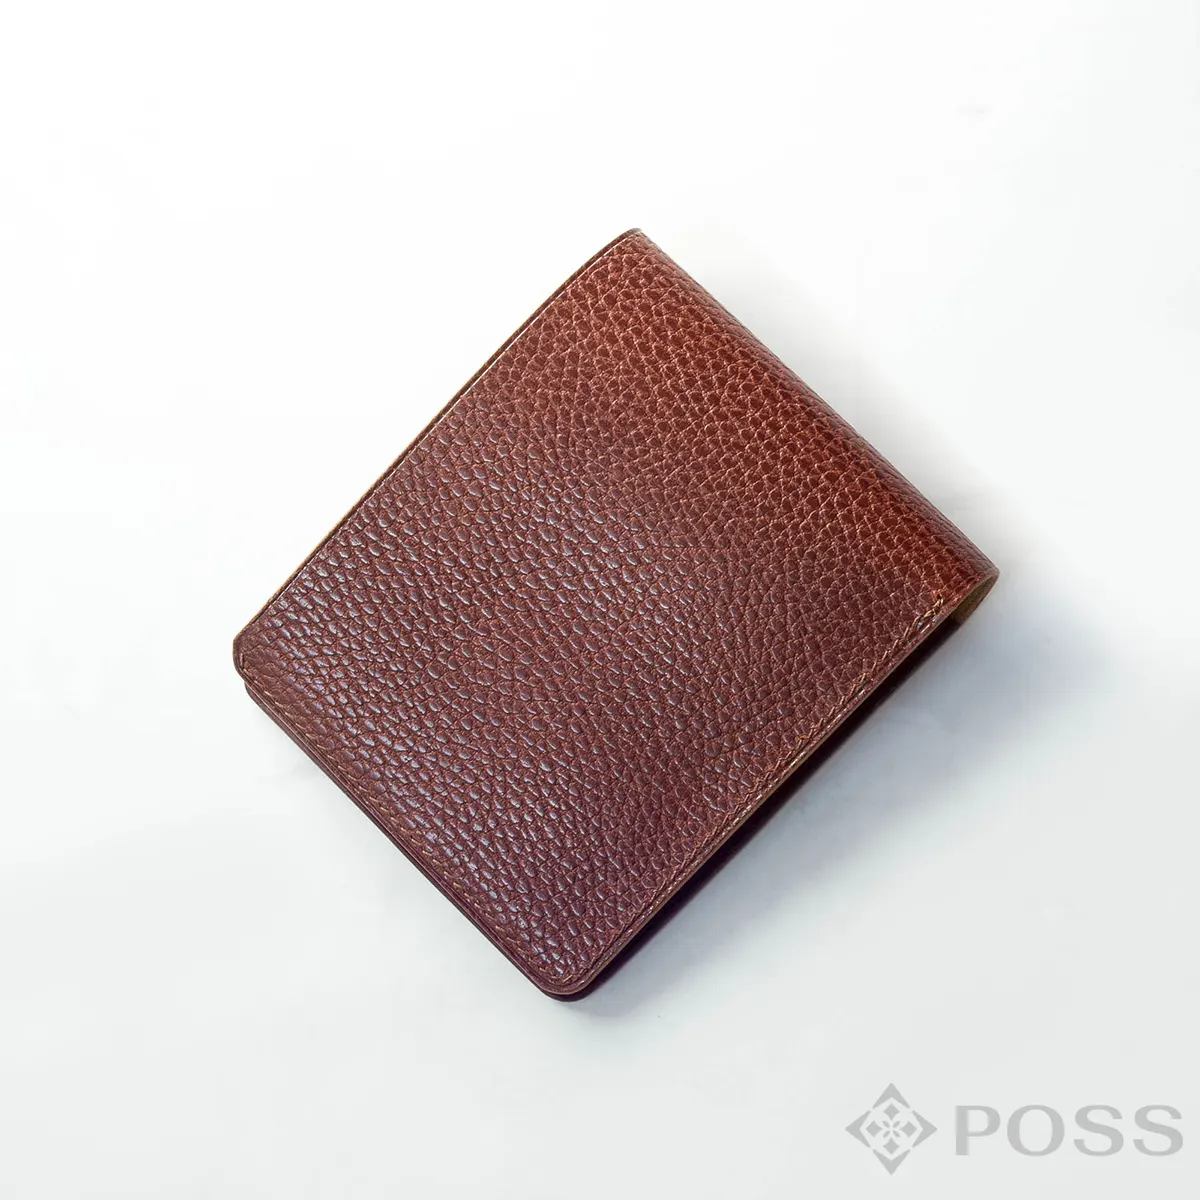 possala designs handmade vegetable tanned leather wallet